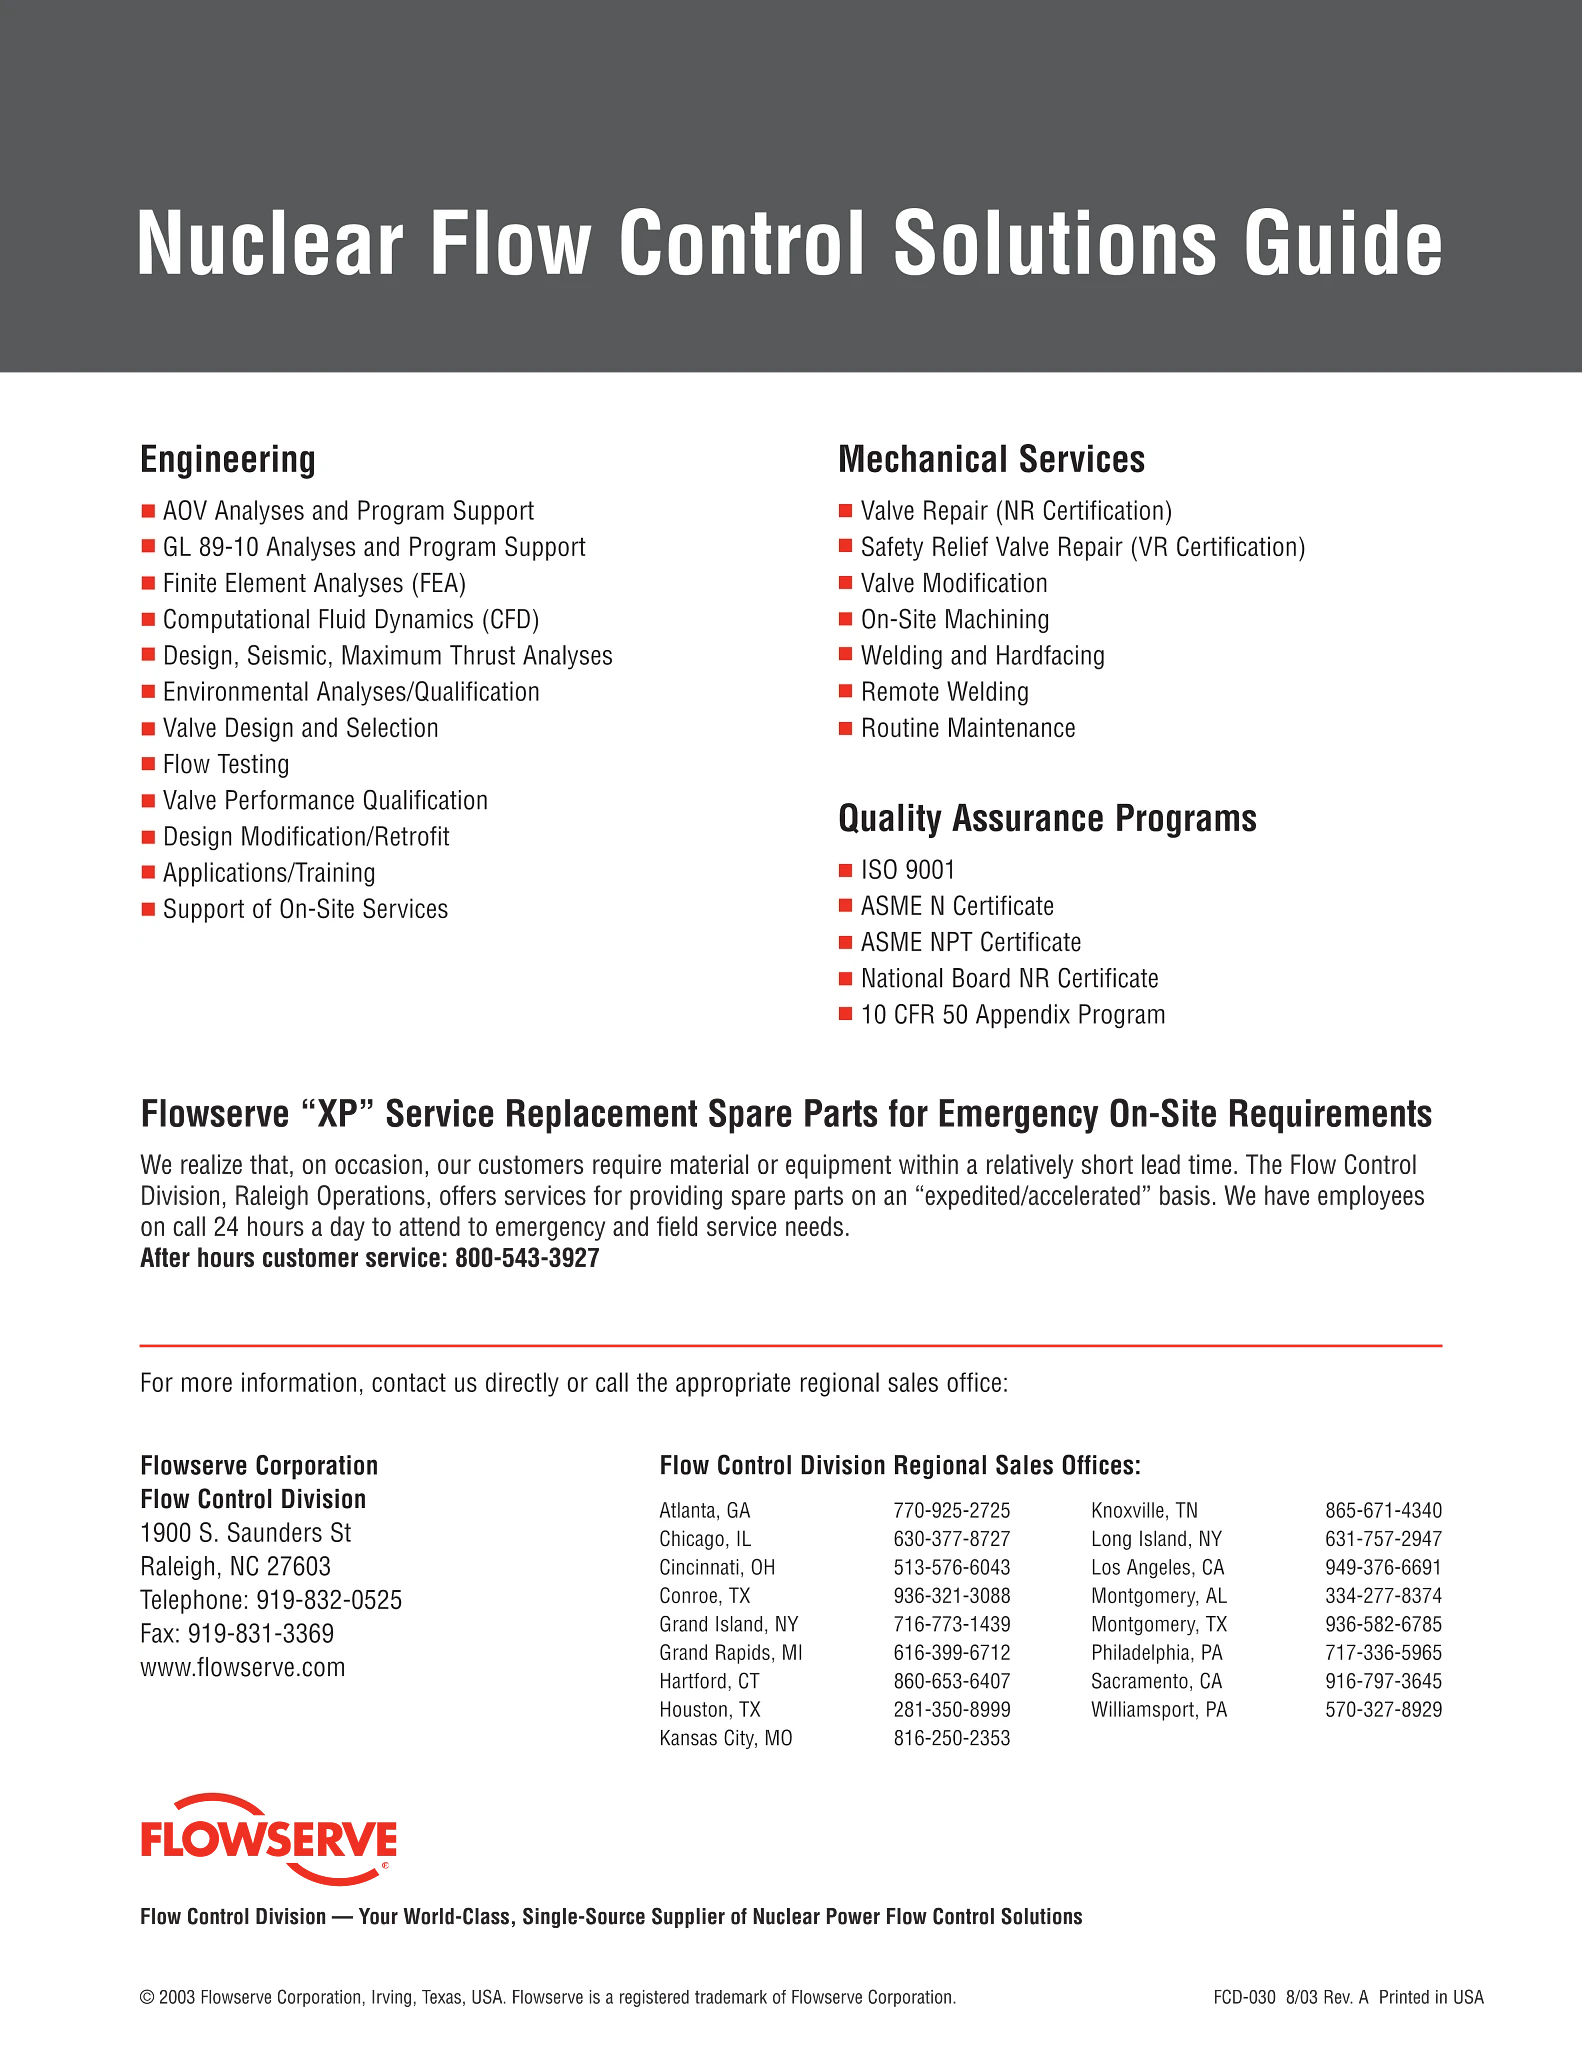 Flowserve核流量控制解决方案产品指南